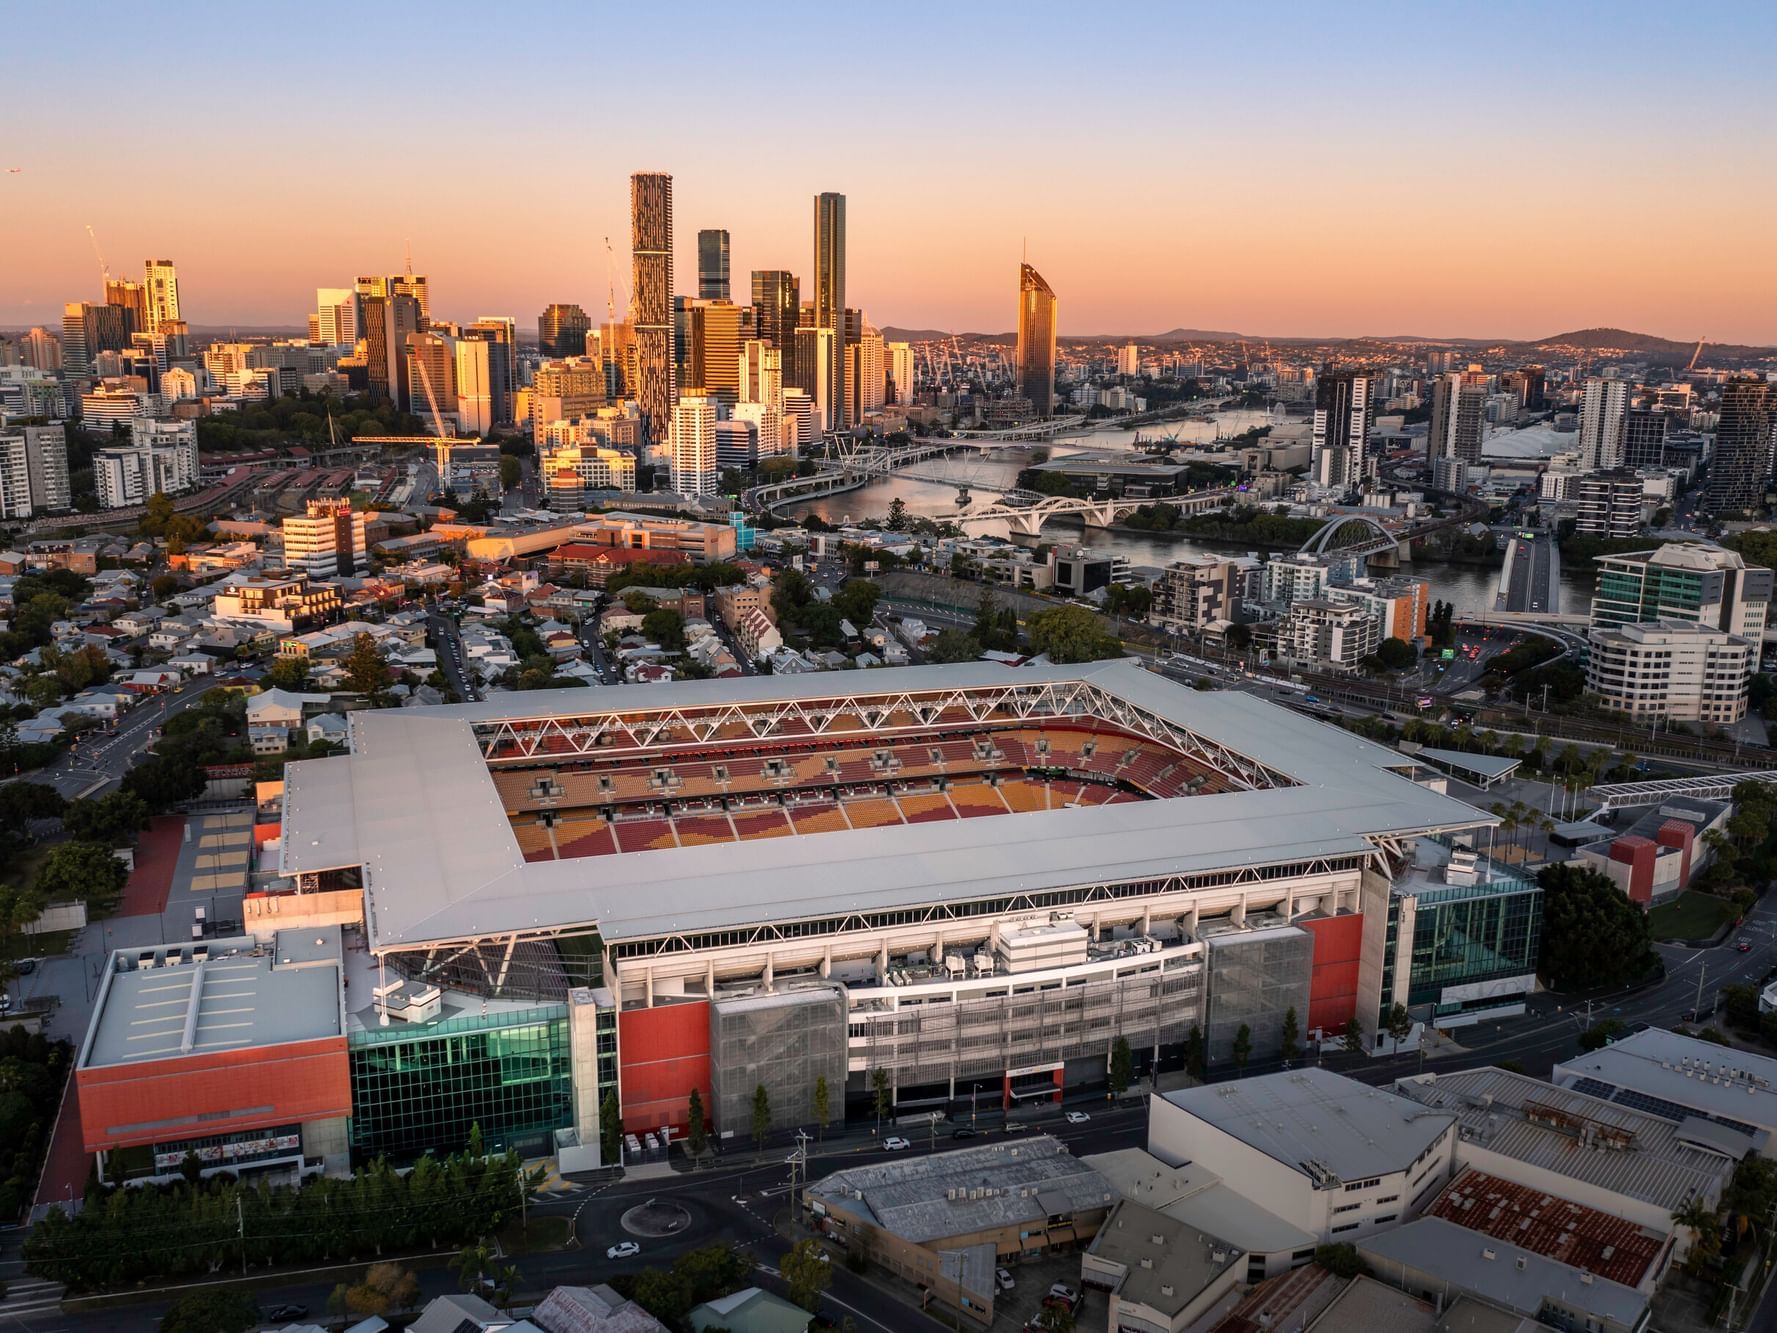 Aerial view of Suncorp Stadium in evening near Amora Hotel